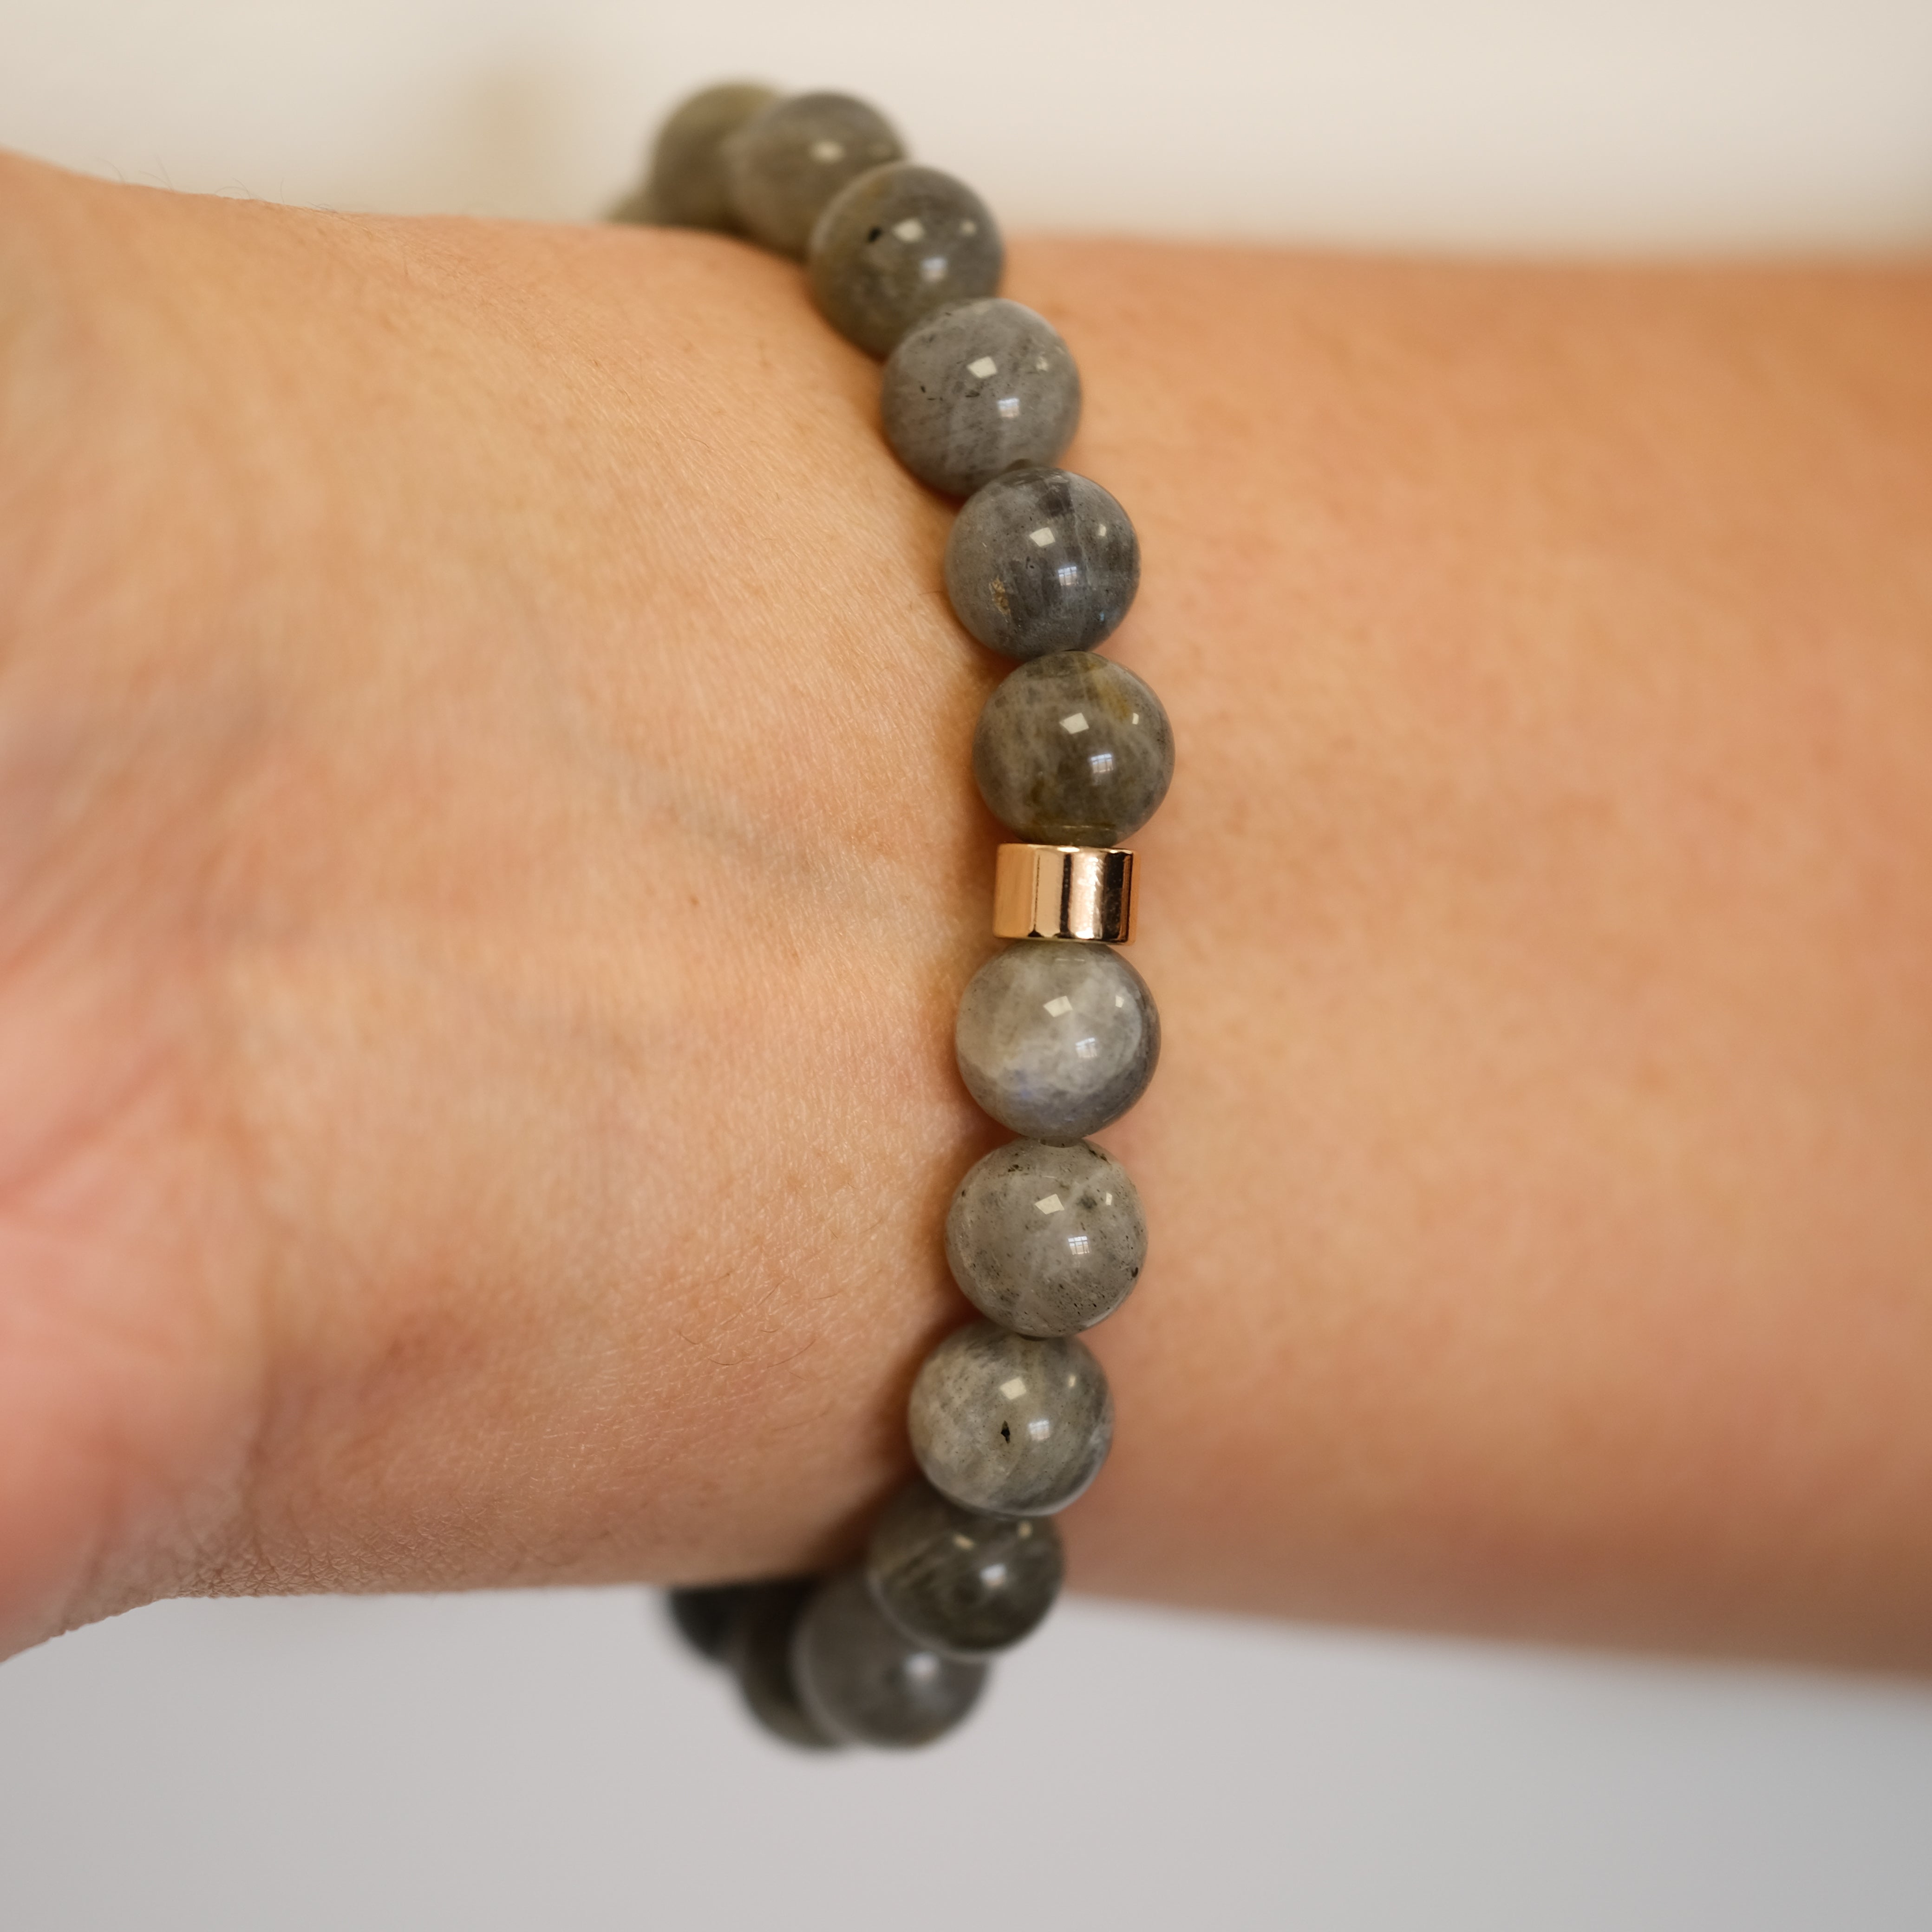 Labradorite gemstone bracelet worn on a model's wrist from the back